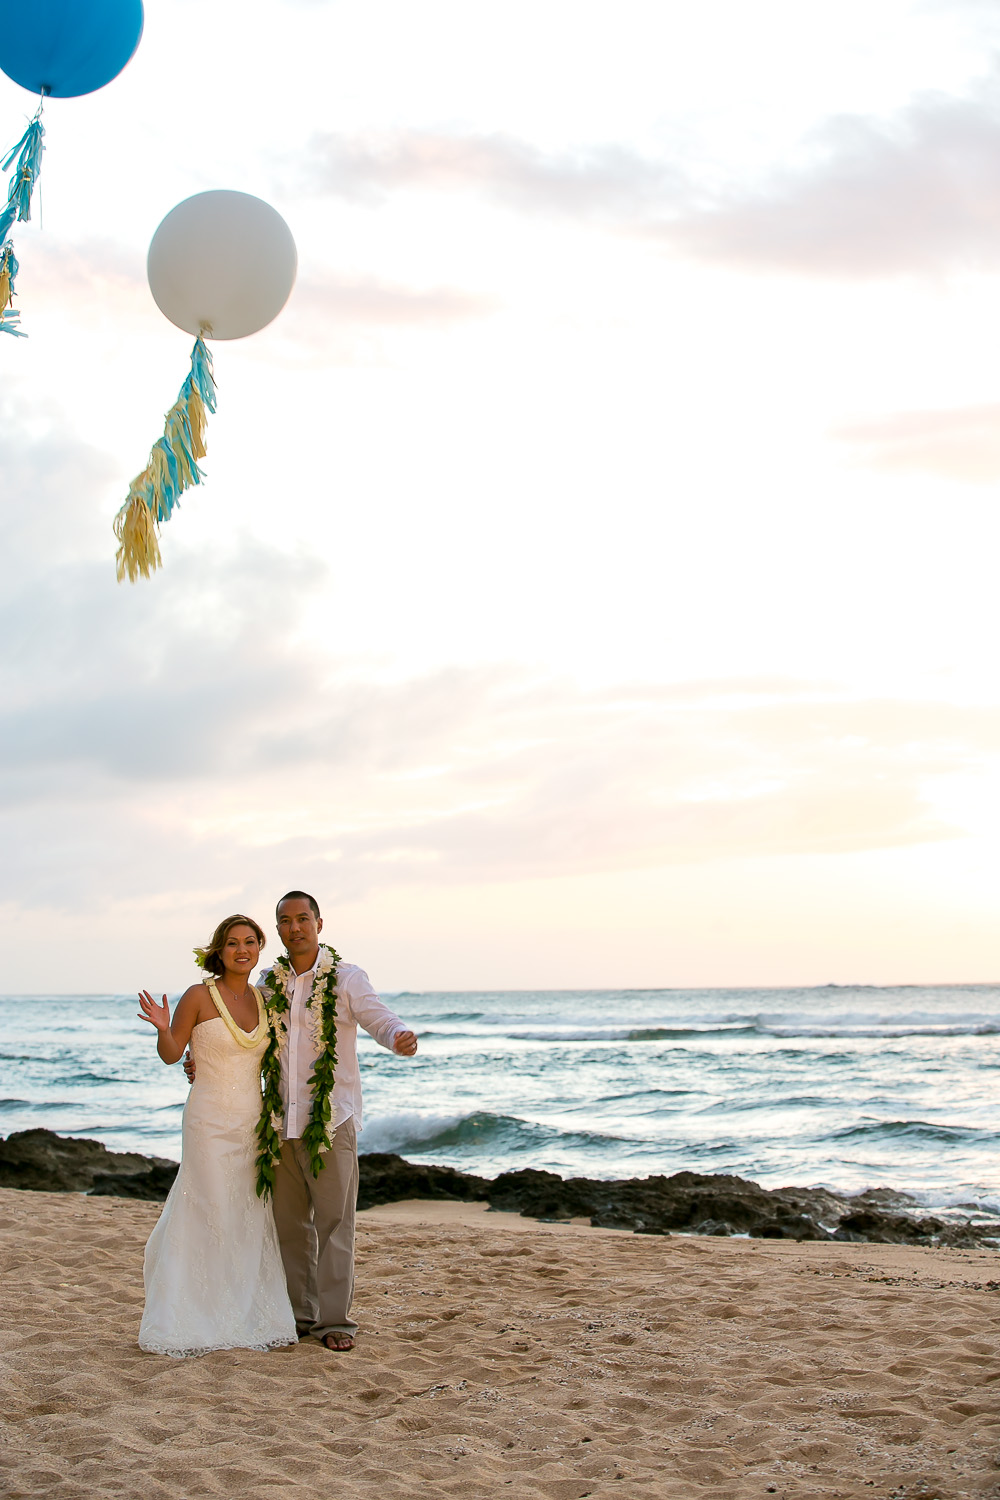 oahu wedding photography, chris holt photography, wedding, love, beach, north shore, hawaii, loulu palm estate, private estate